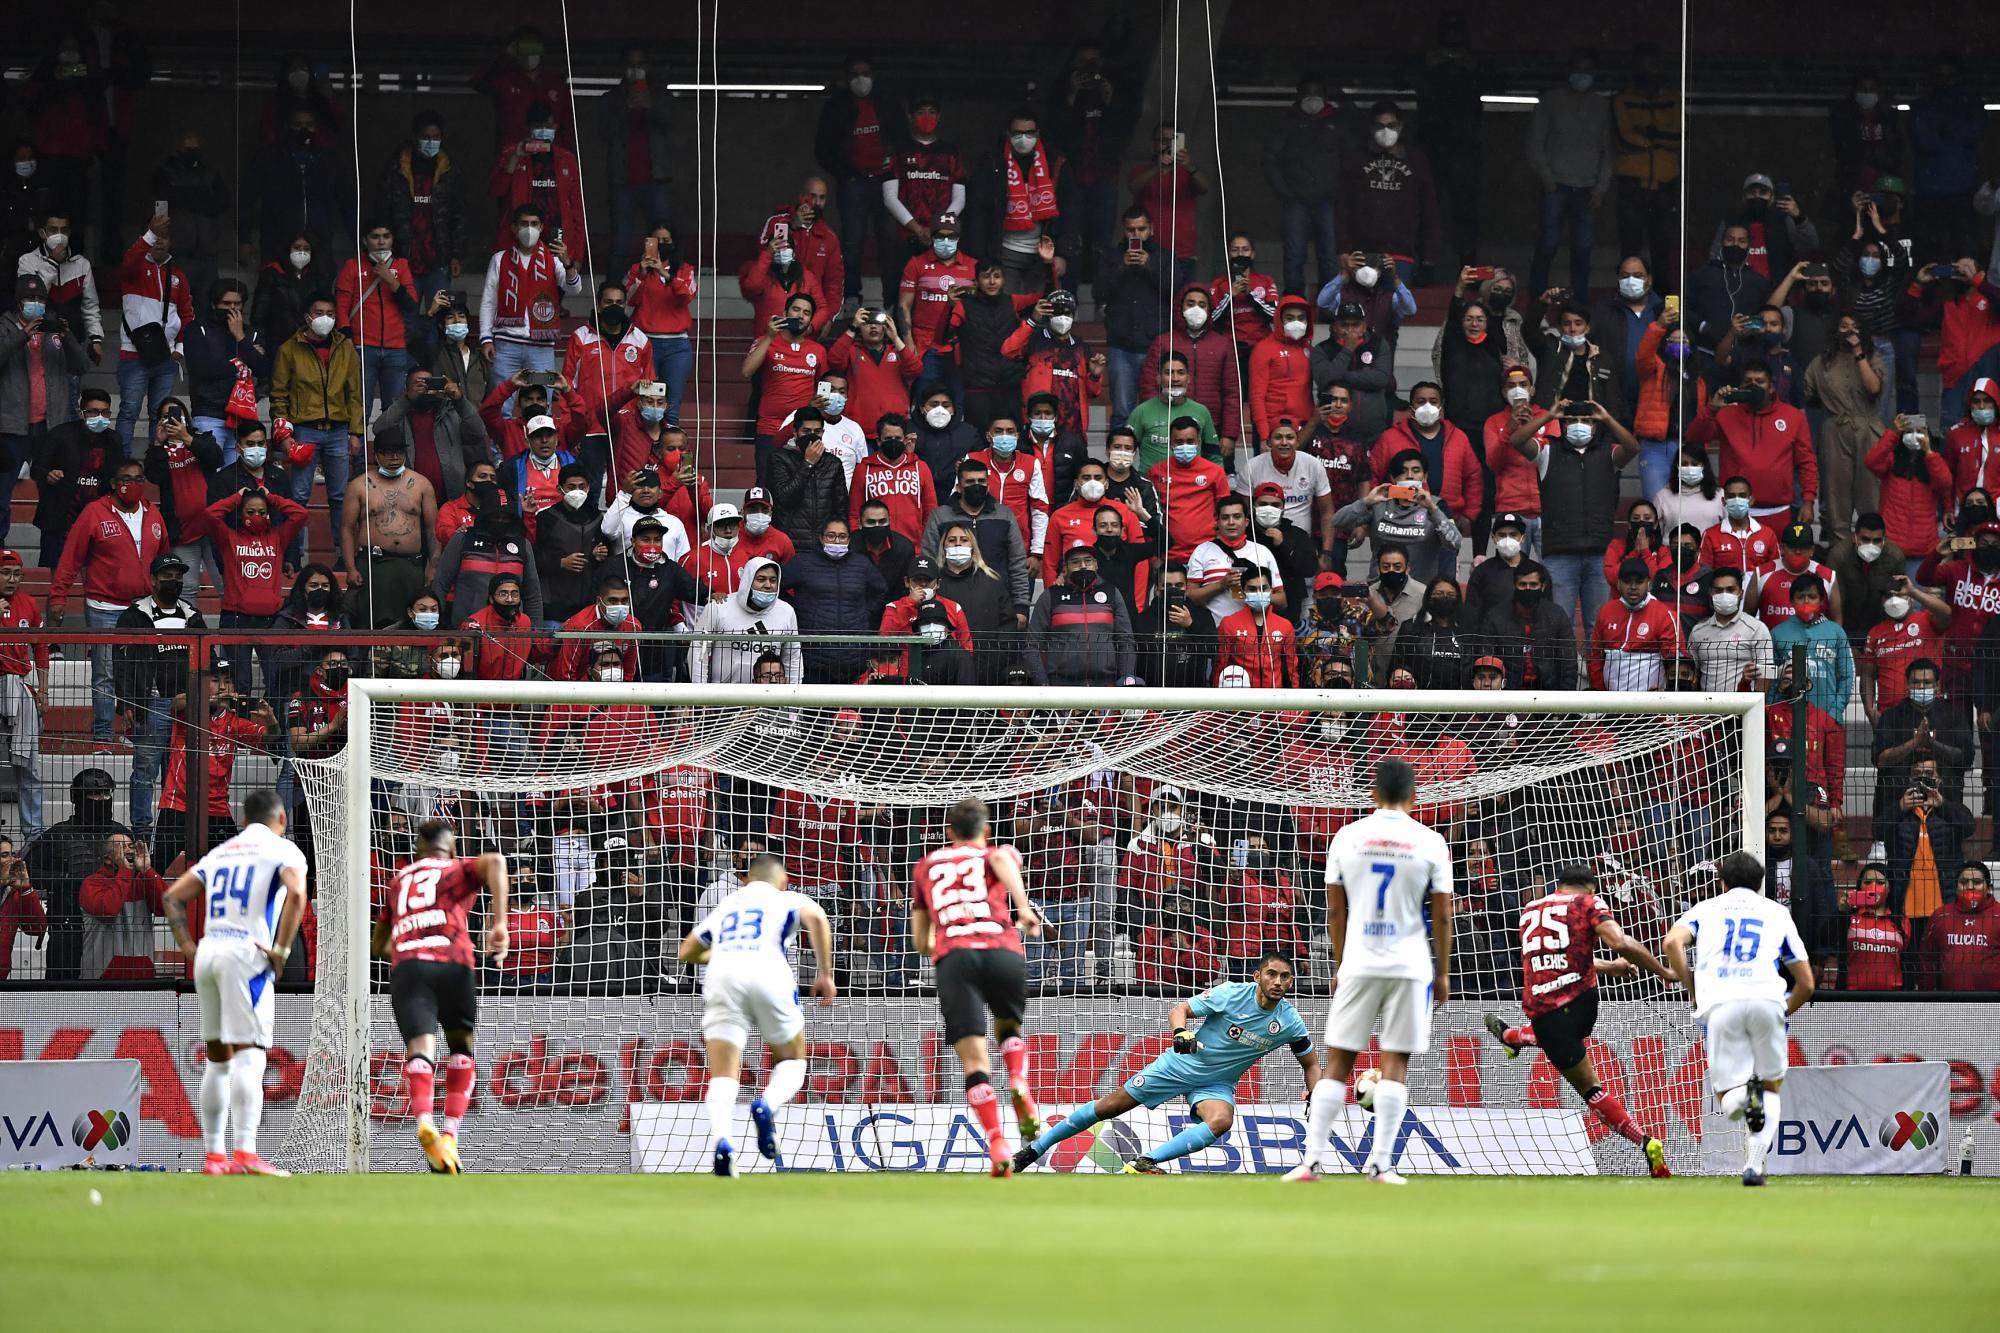 $!Con polémica arbitral, Toluca vence 2-1 al Cruz Azul en arranque de liguilla